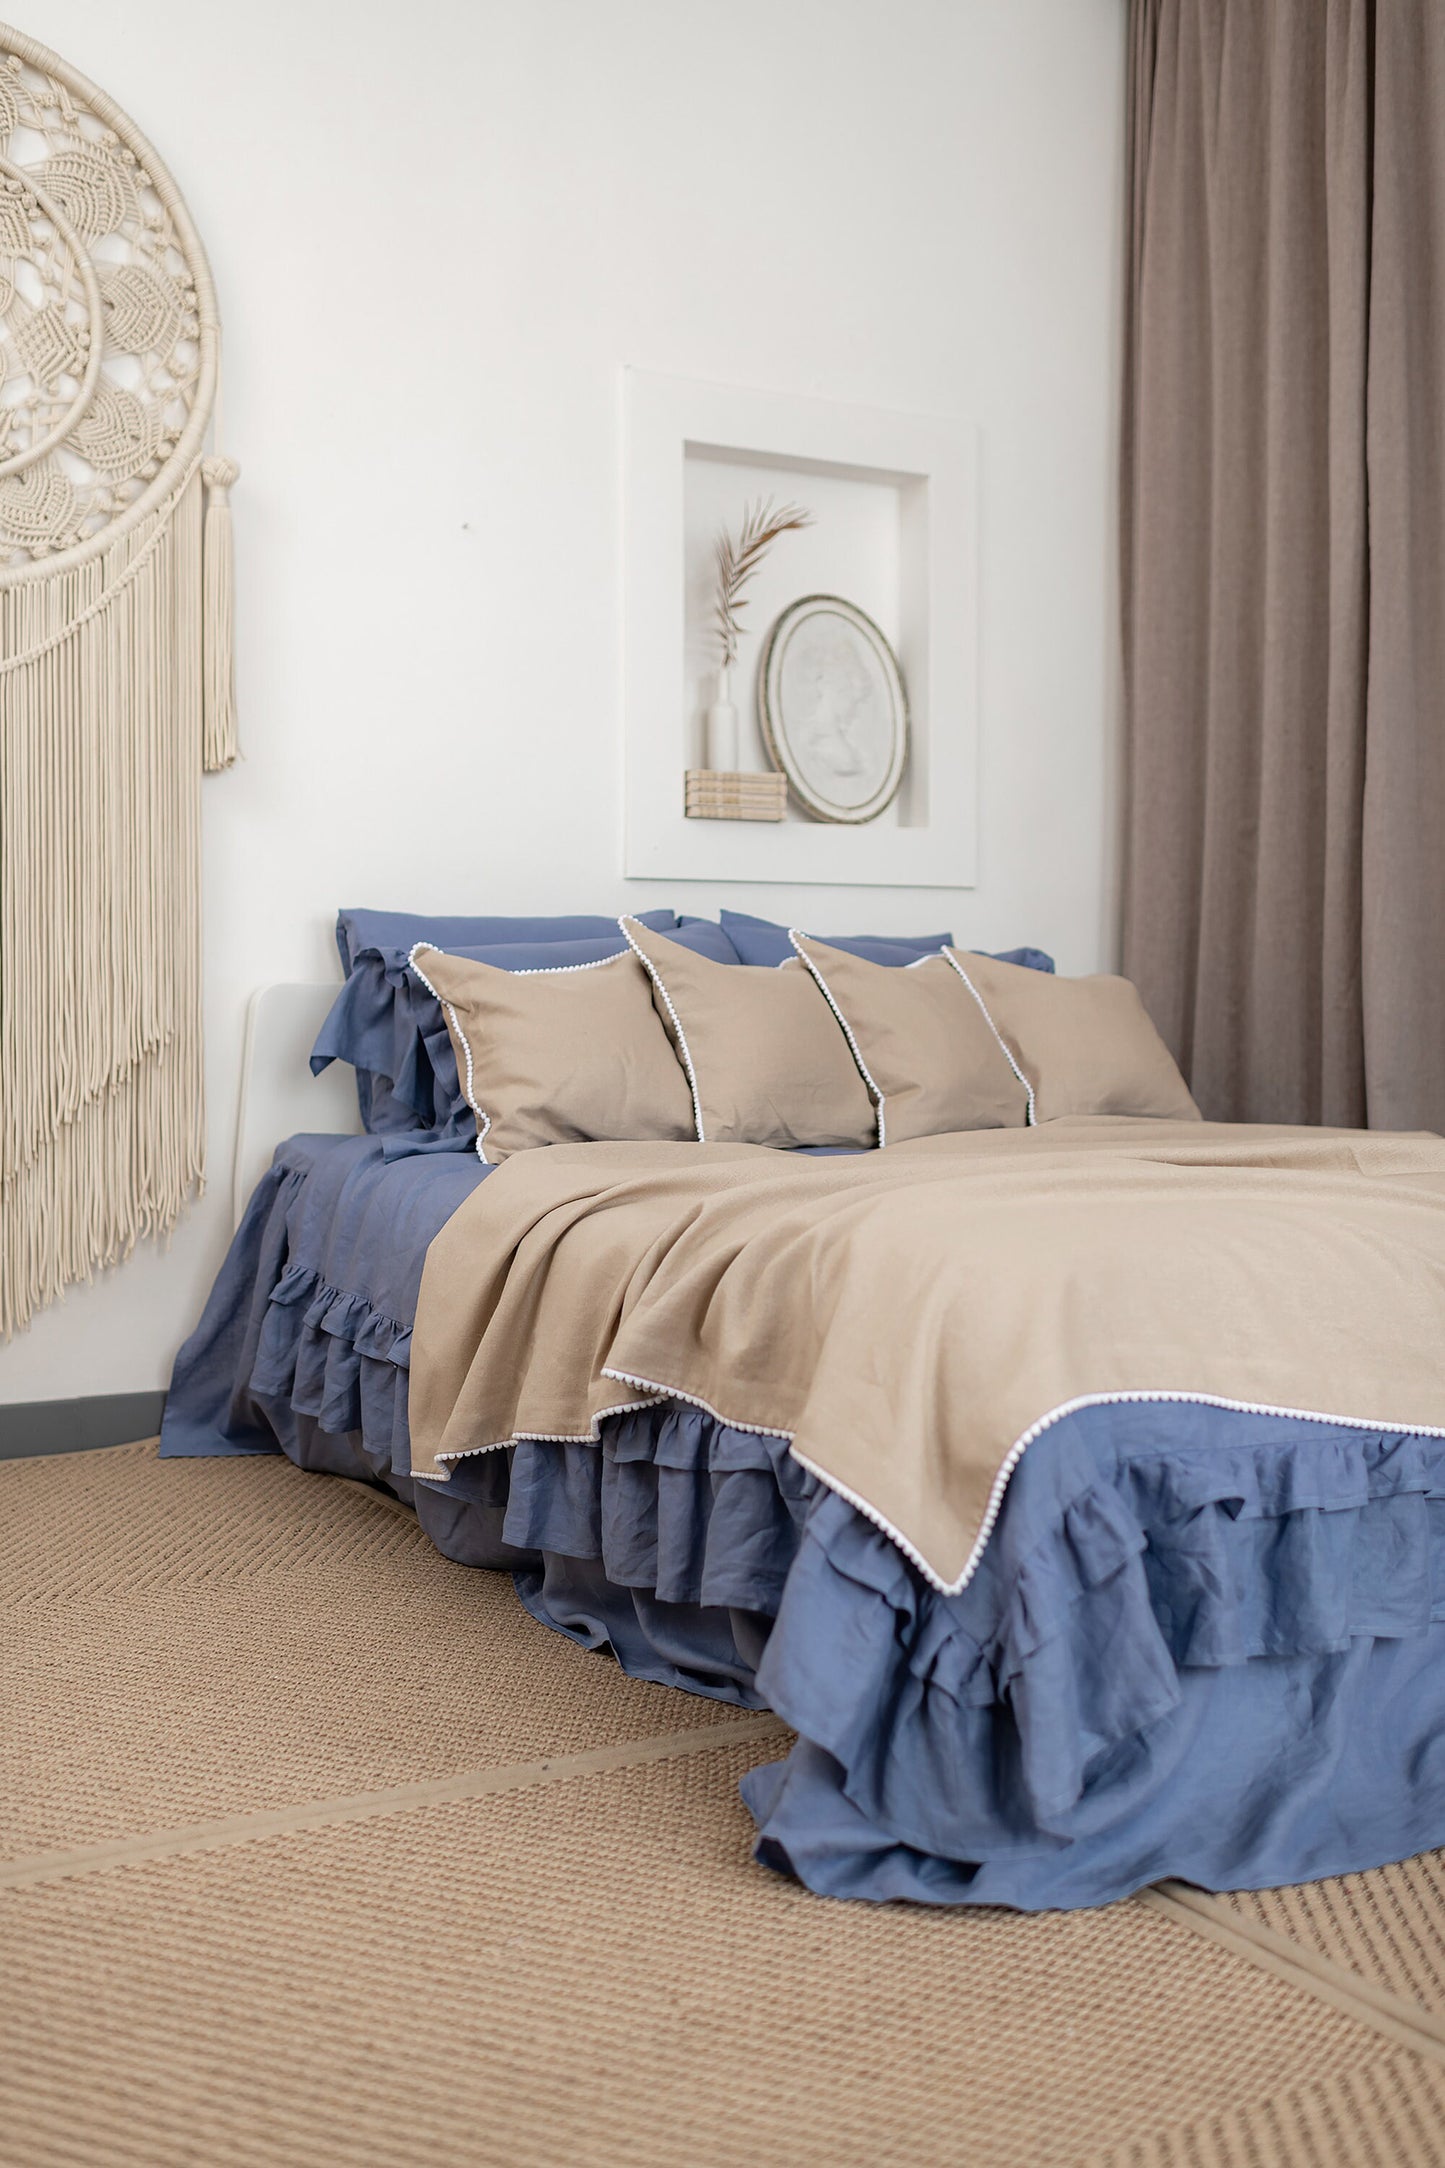 Luxury Linen Duvet Cover Set with Double Ruffles. Vintage Style Linen Bedding.